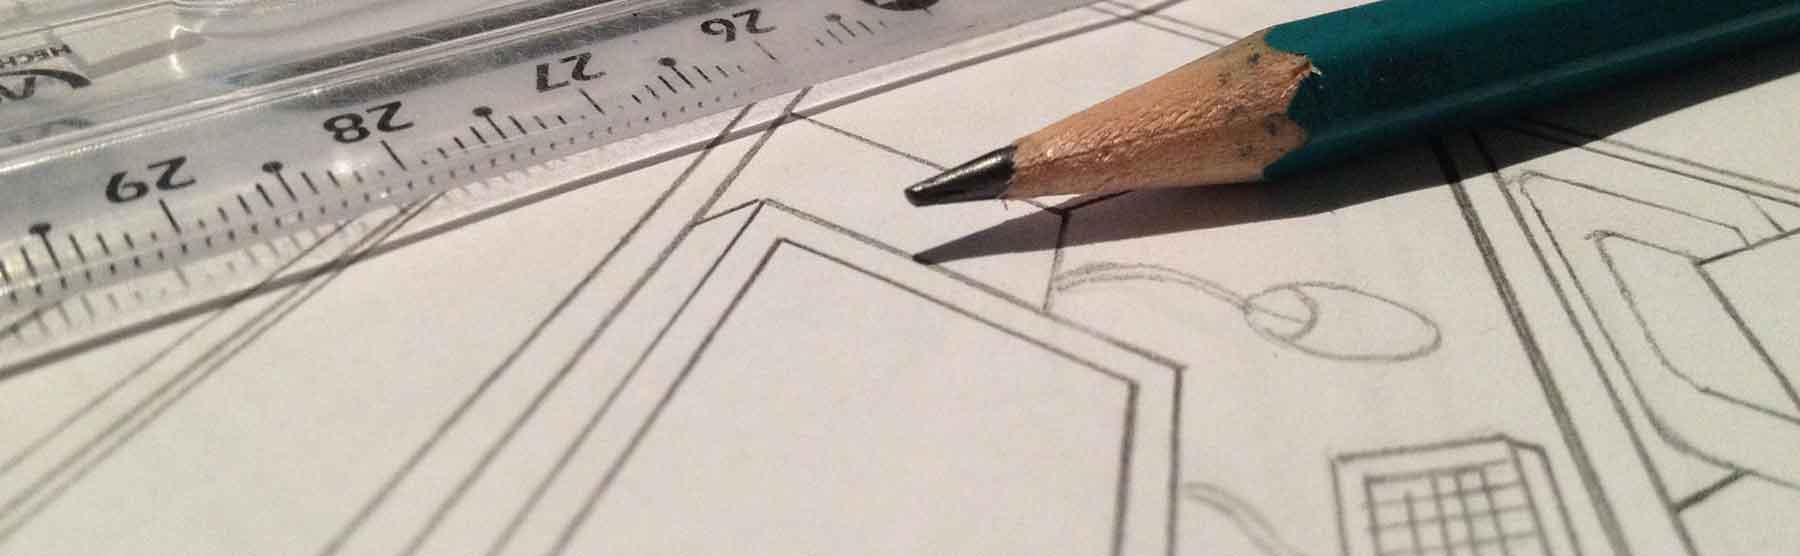 Vector line art drawings for manuals